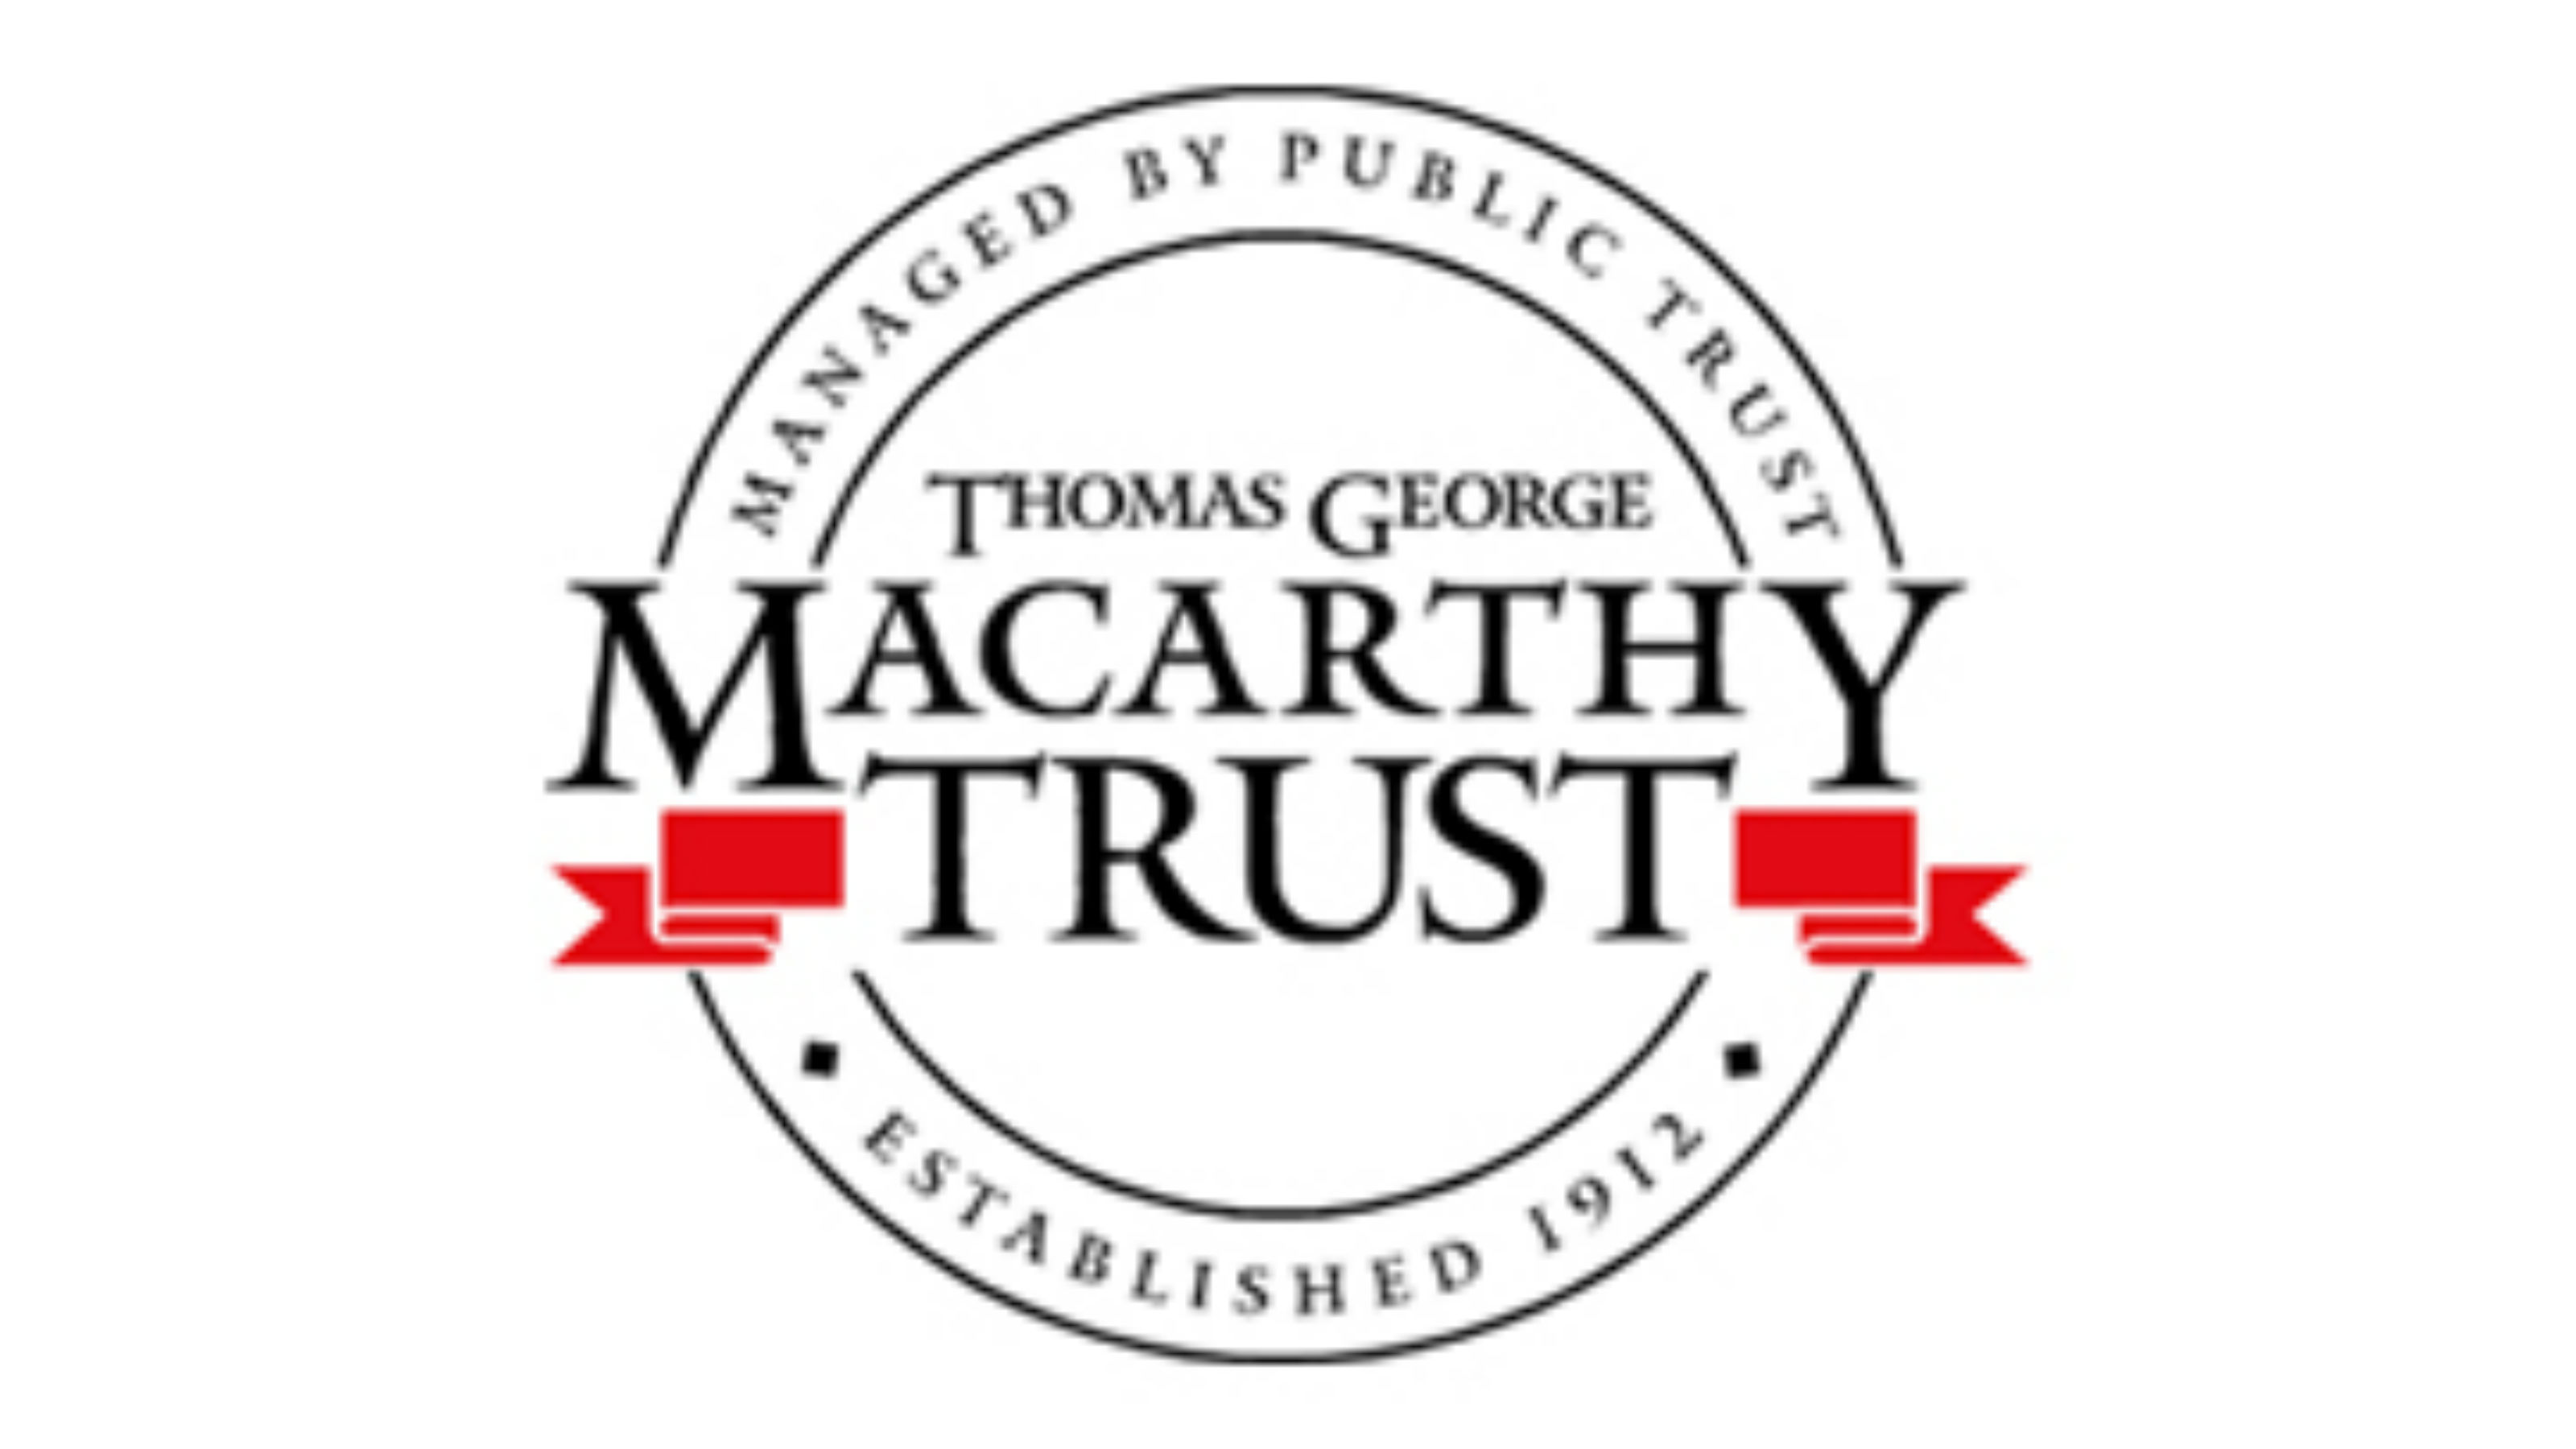 The T.G. Macarthy Trust logo.